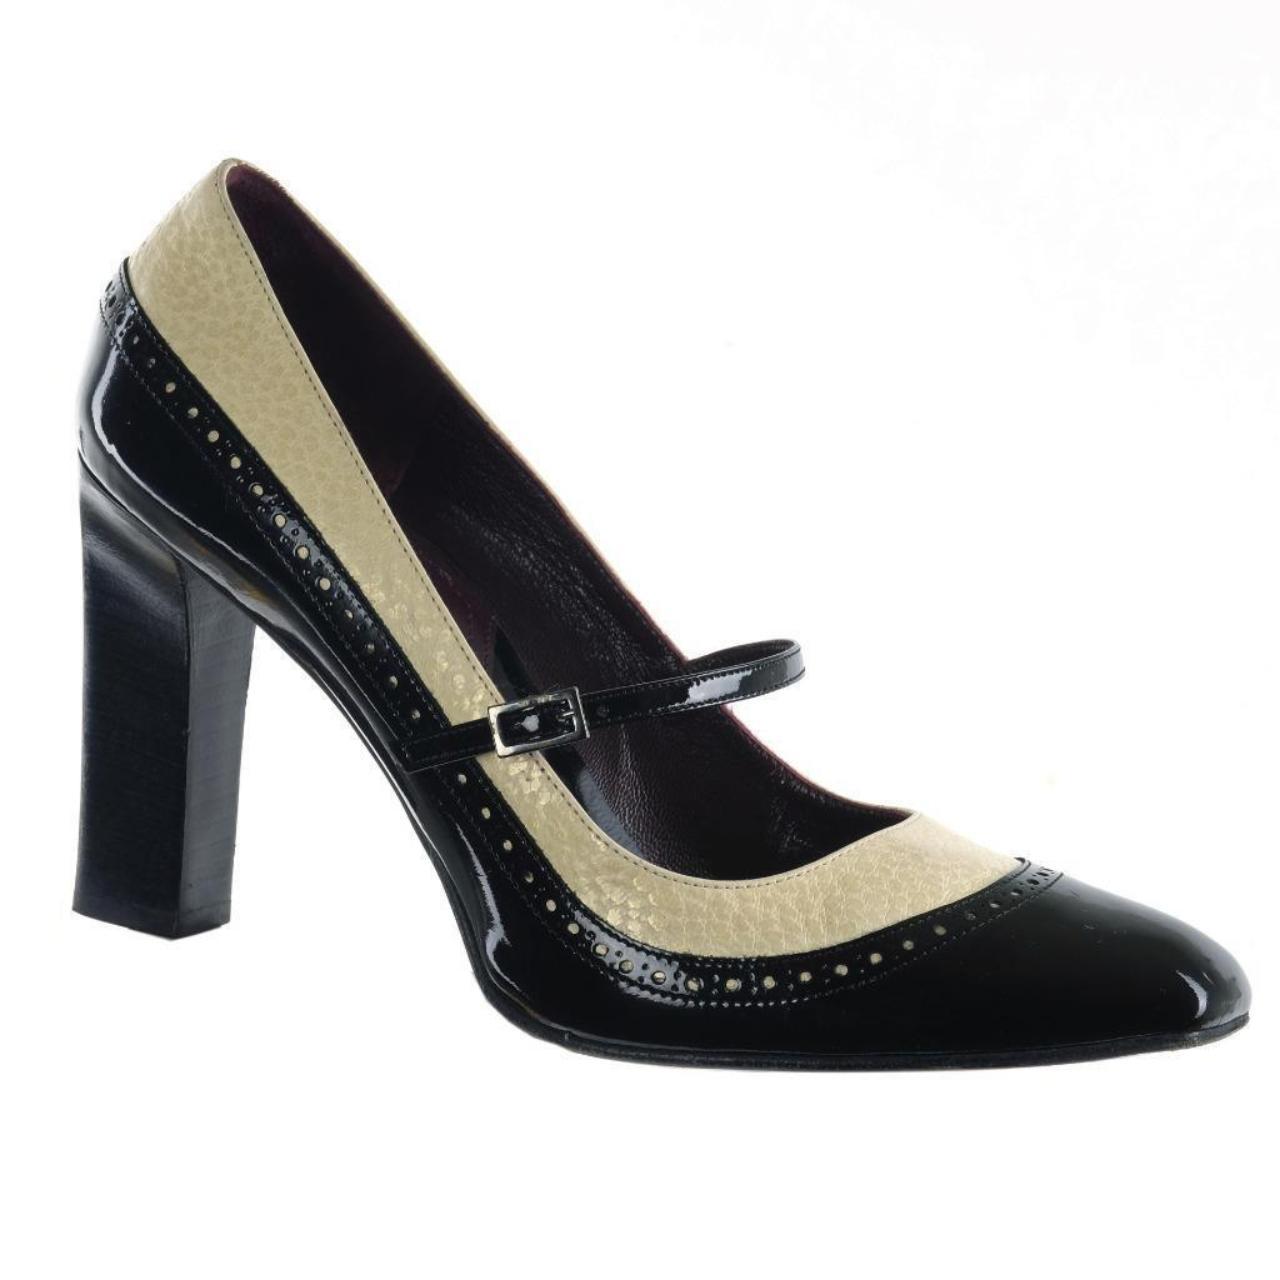 VIA SPIGA mary jane heels. Size 8.5 M (US sizing).... - Depop